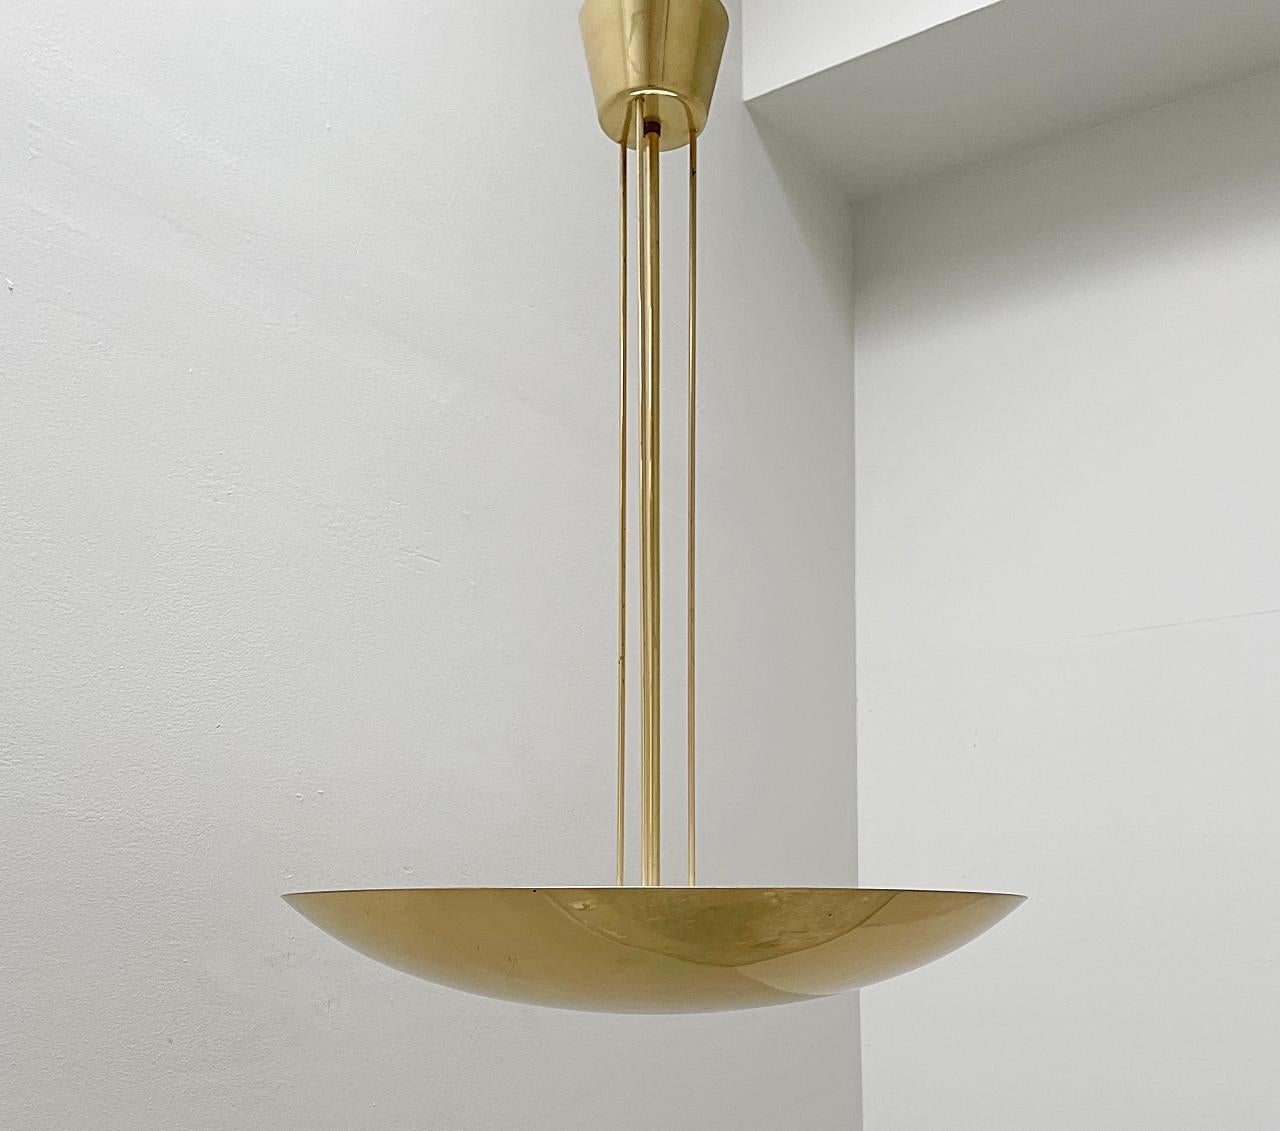 Austrian J.T. KALMAR Uplight Ceiling Brass Lamp, Chandelier, Mod. 8585, 1960s, Austria For Sale